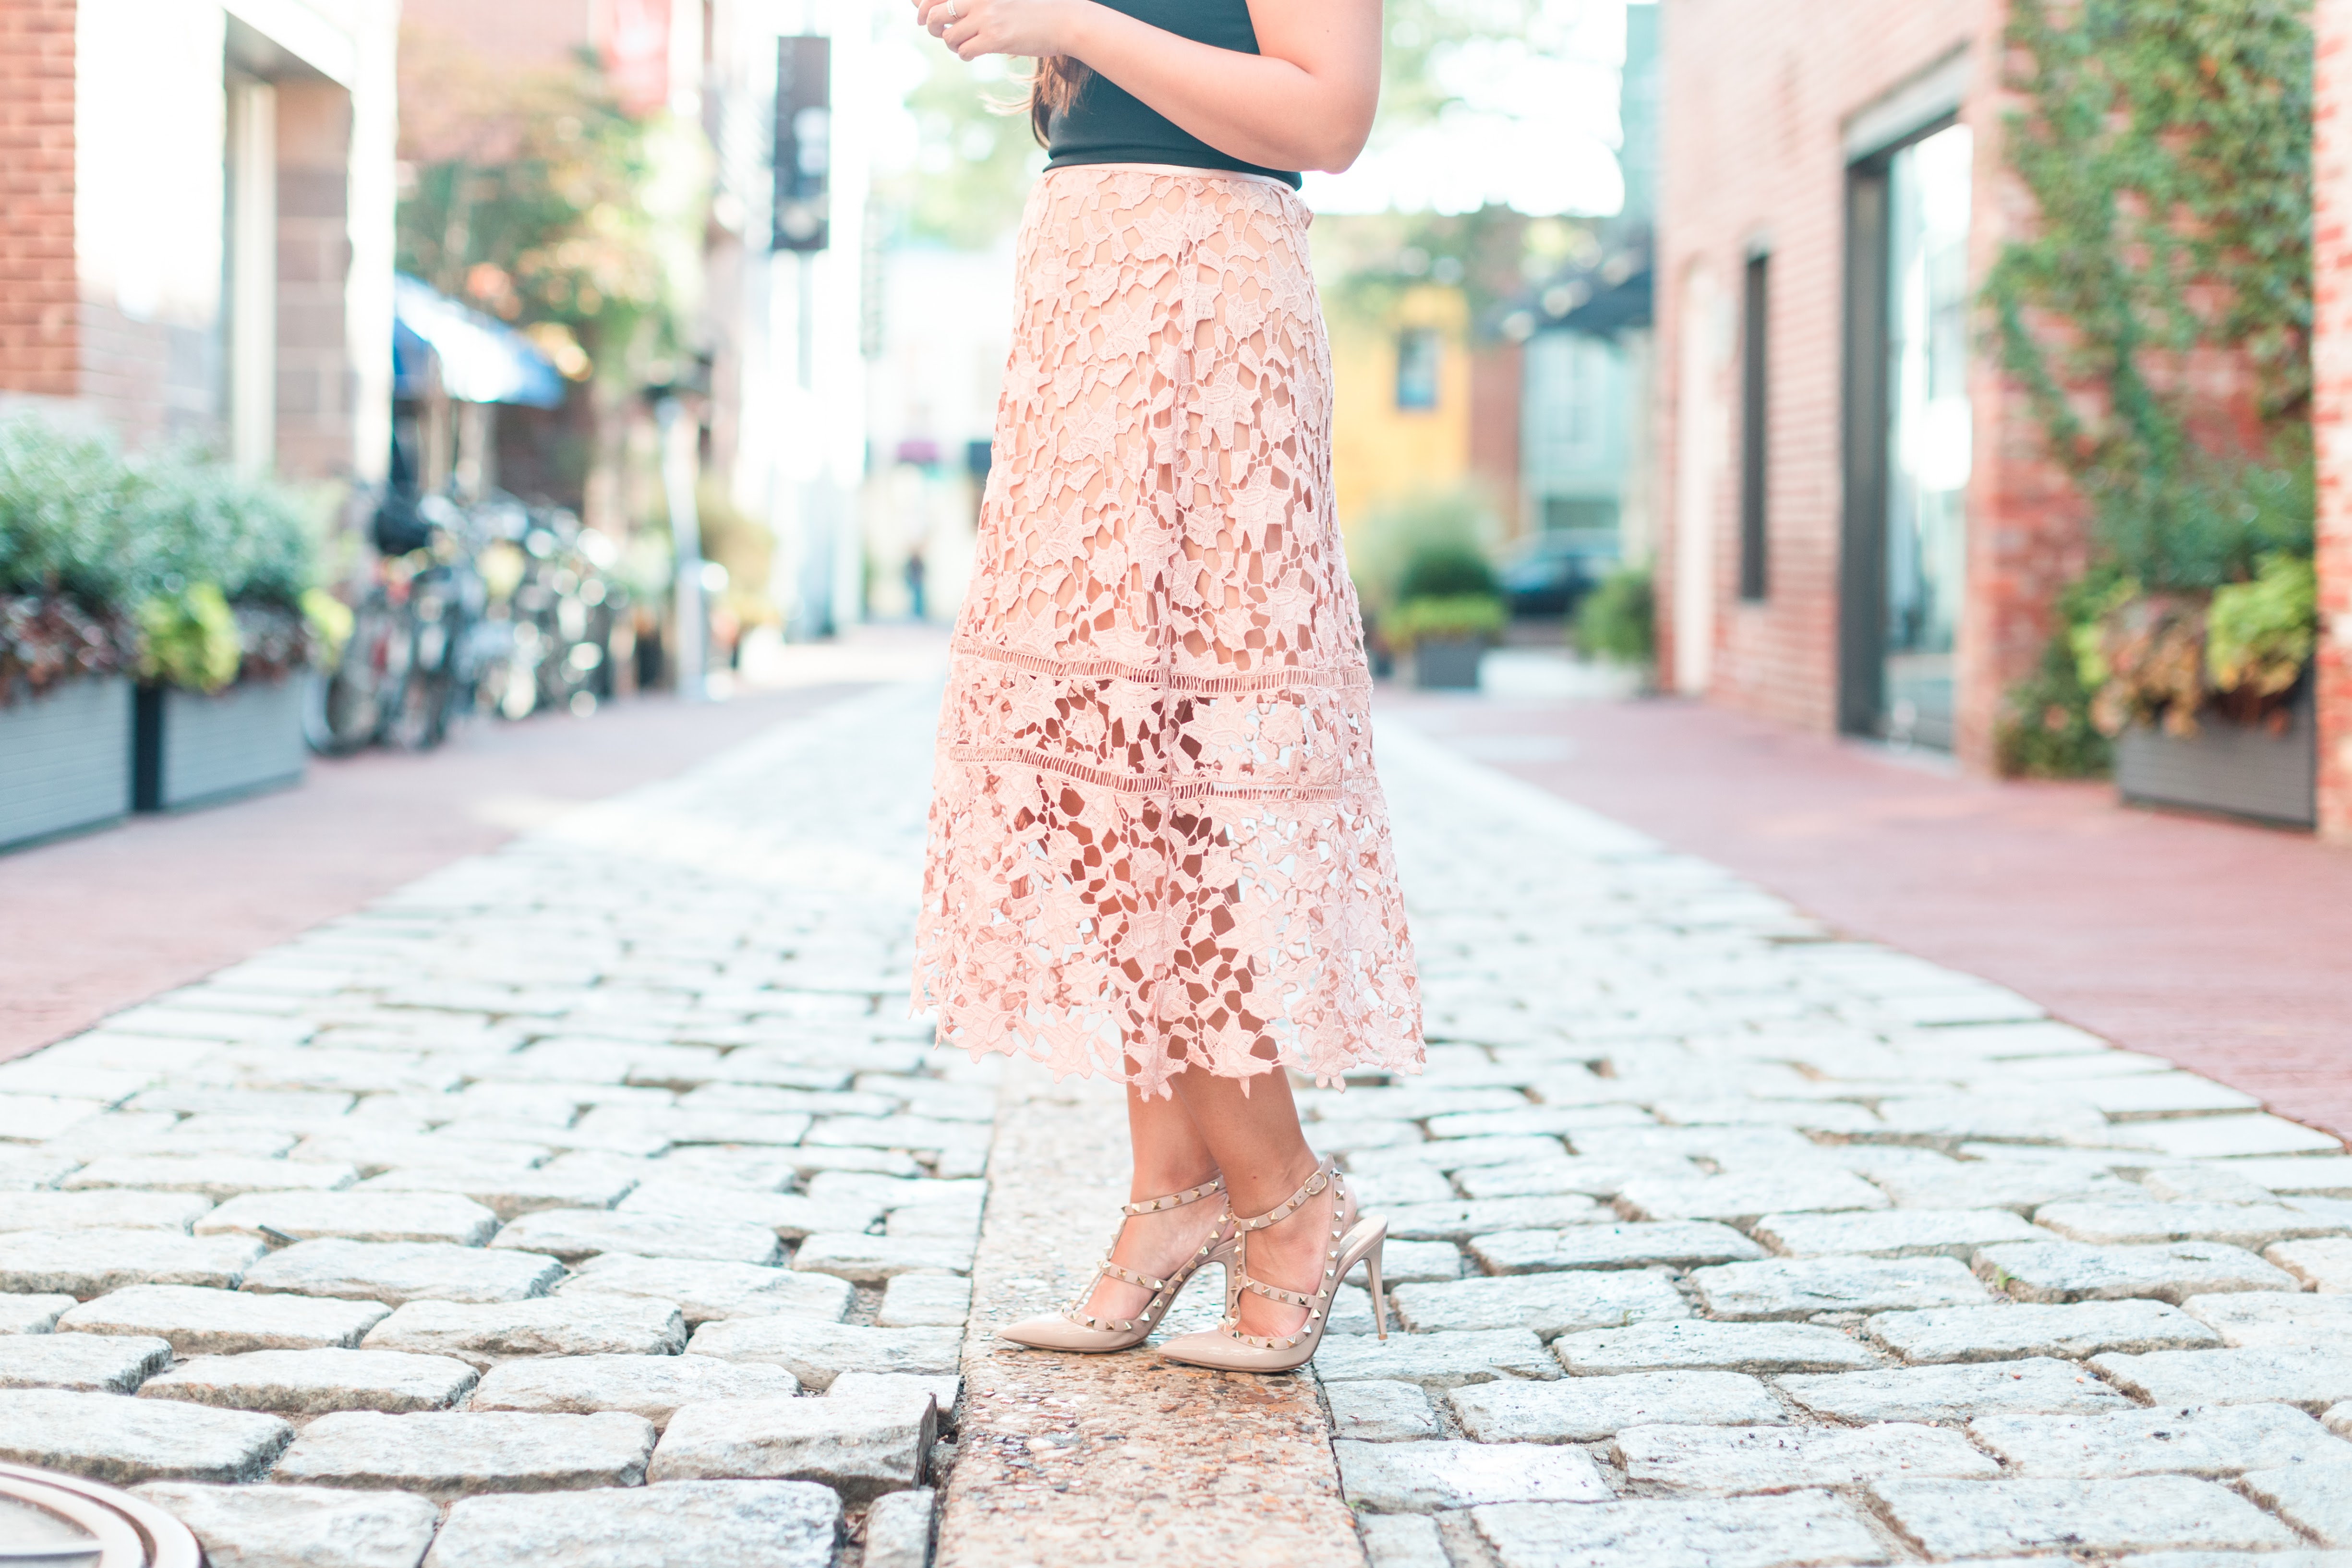 Missguided Pink Crochet Skirt - Stylista Esquire - @stylistaesquire